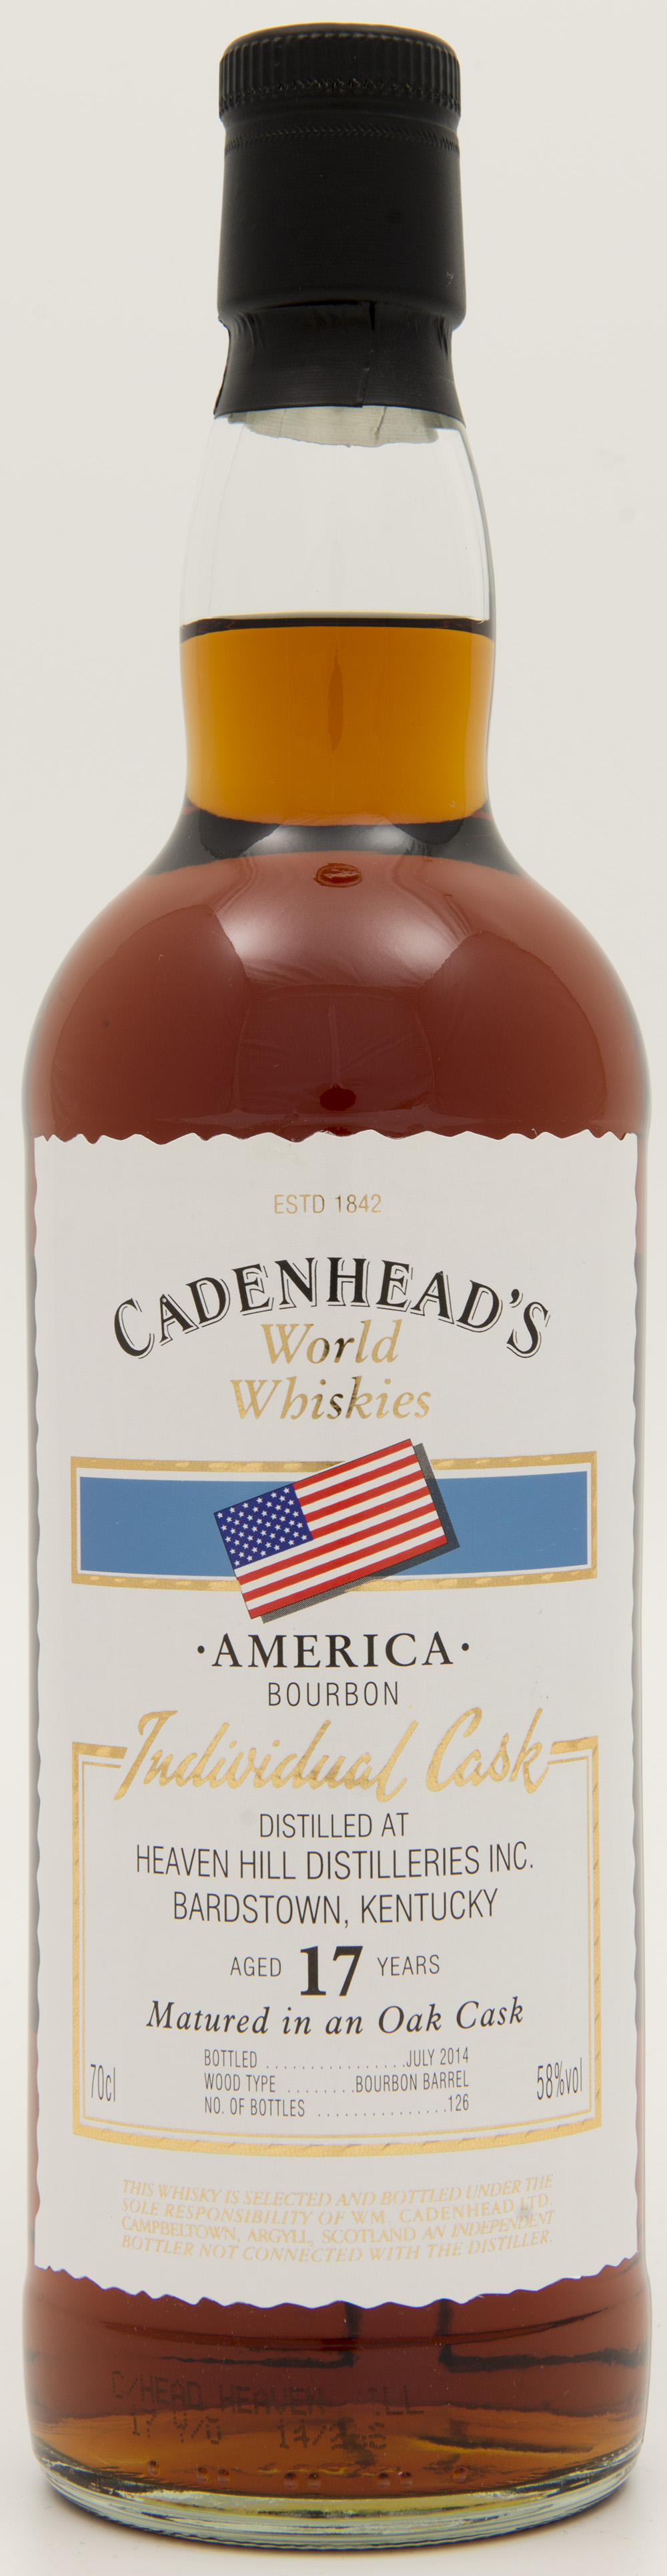 Billede: DSC_4834 - Cadenheads World Whiskies - Heaven Hill 17 years - bottle front.jpg